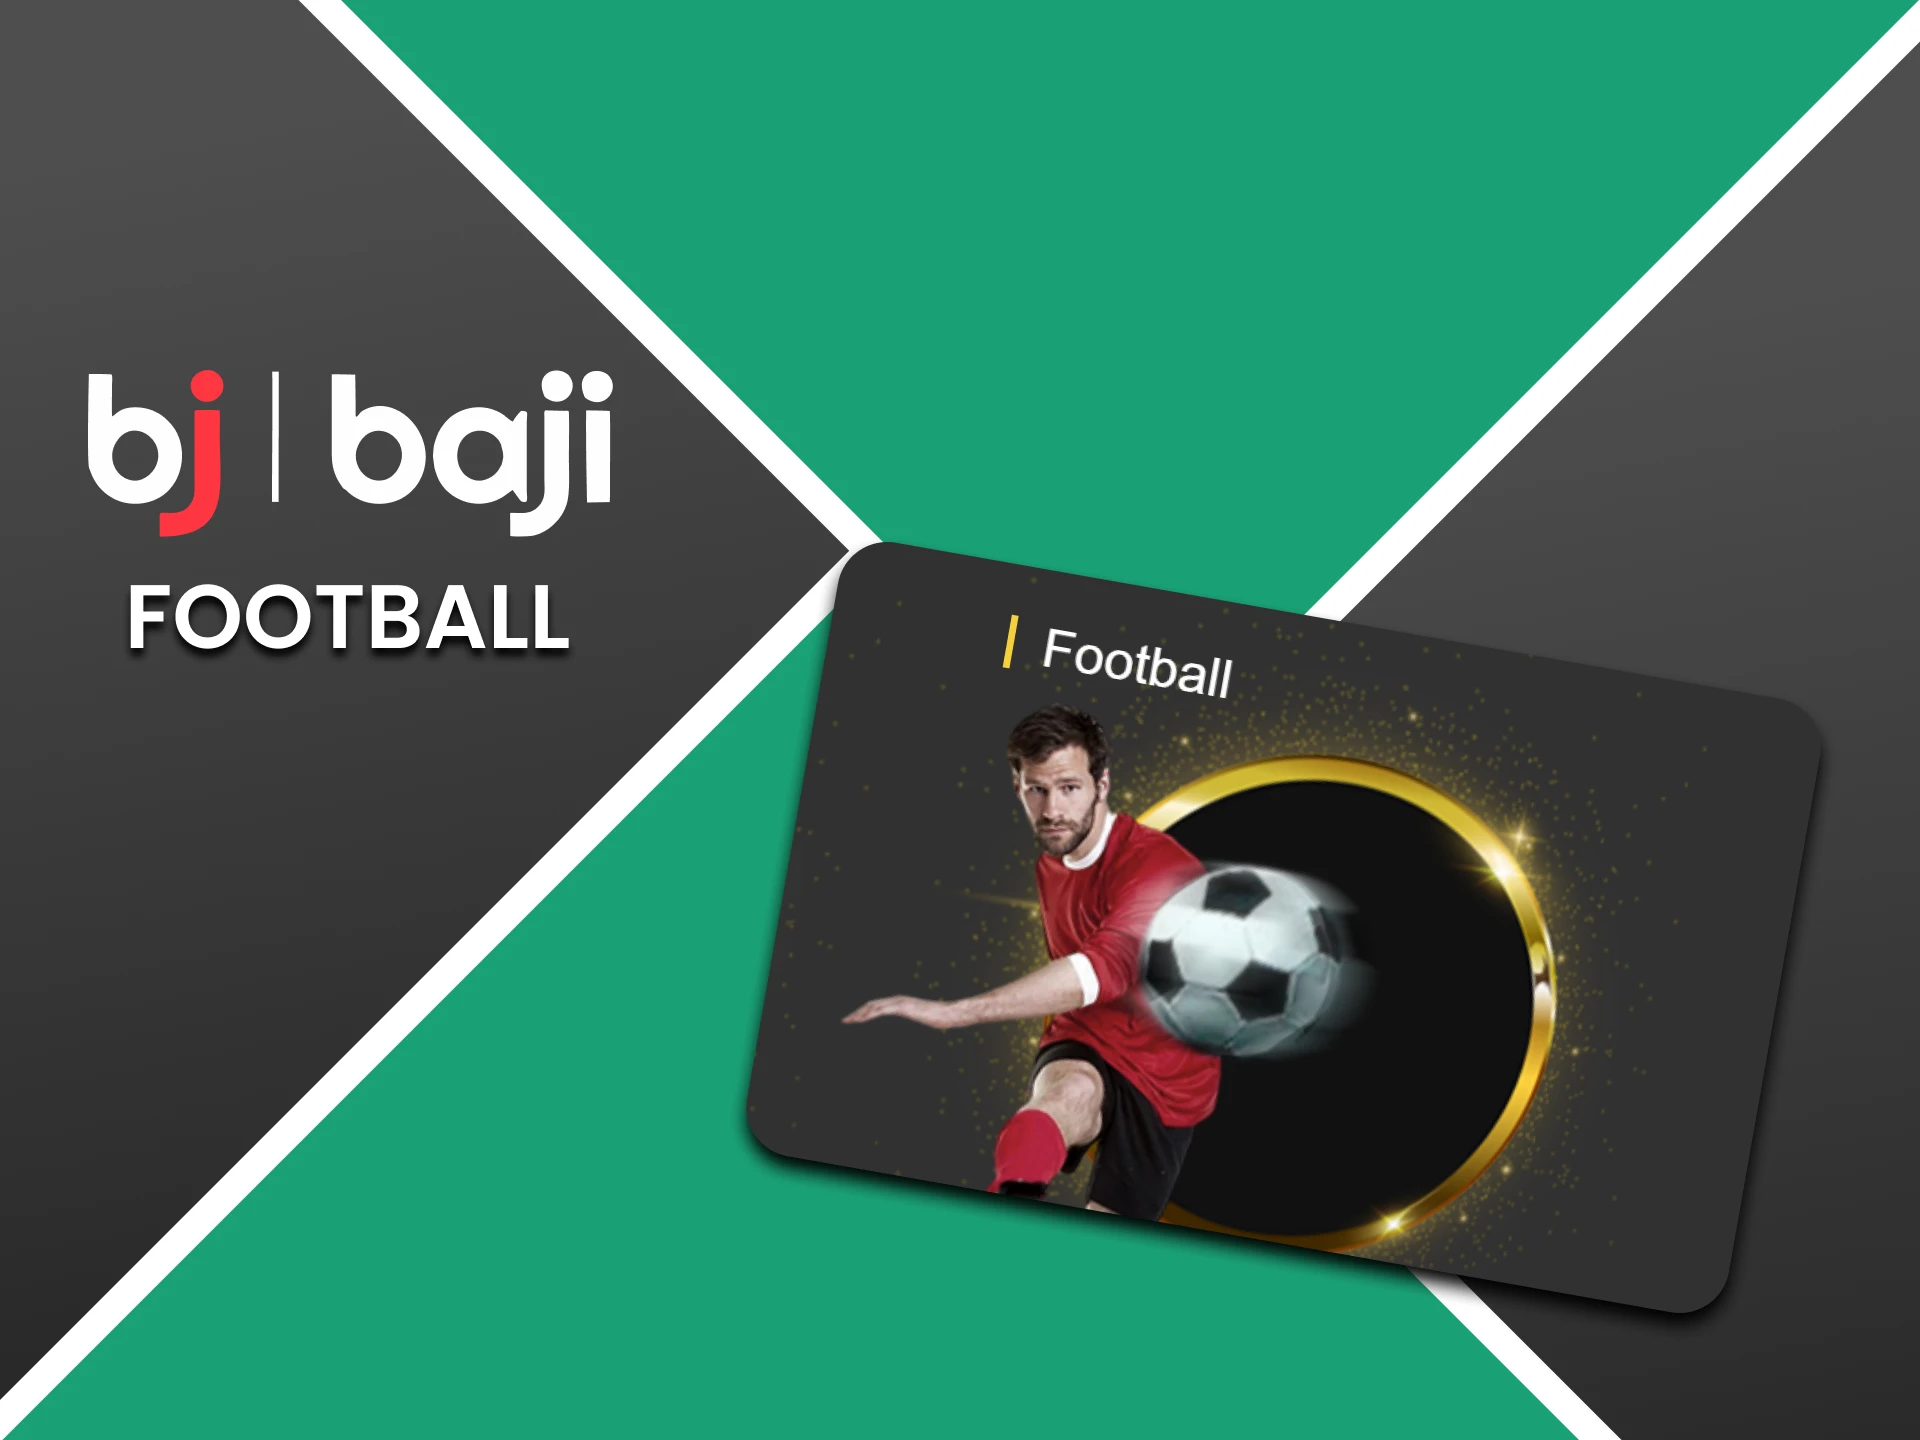 Bet on football with Baji.